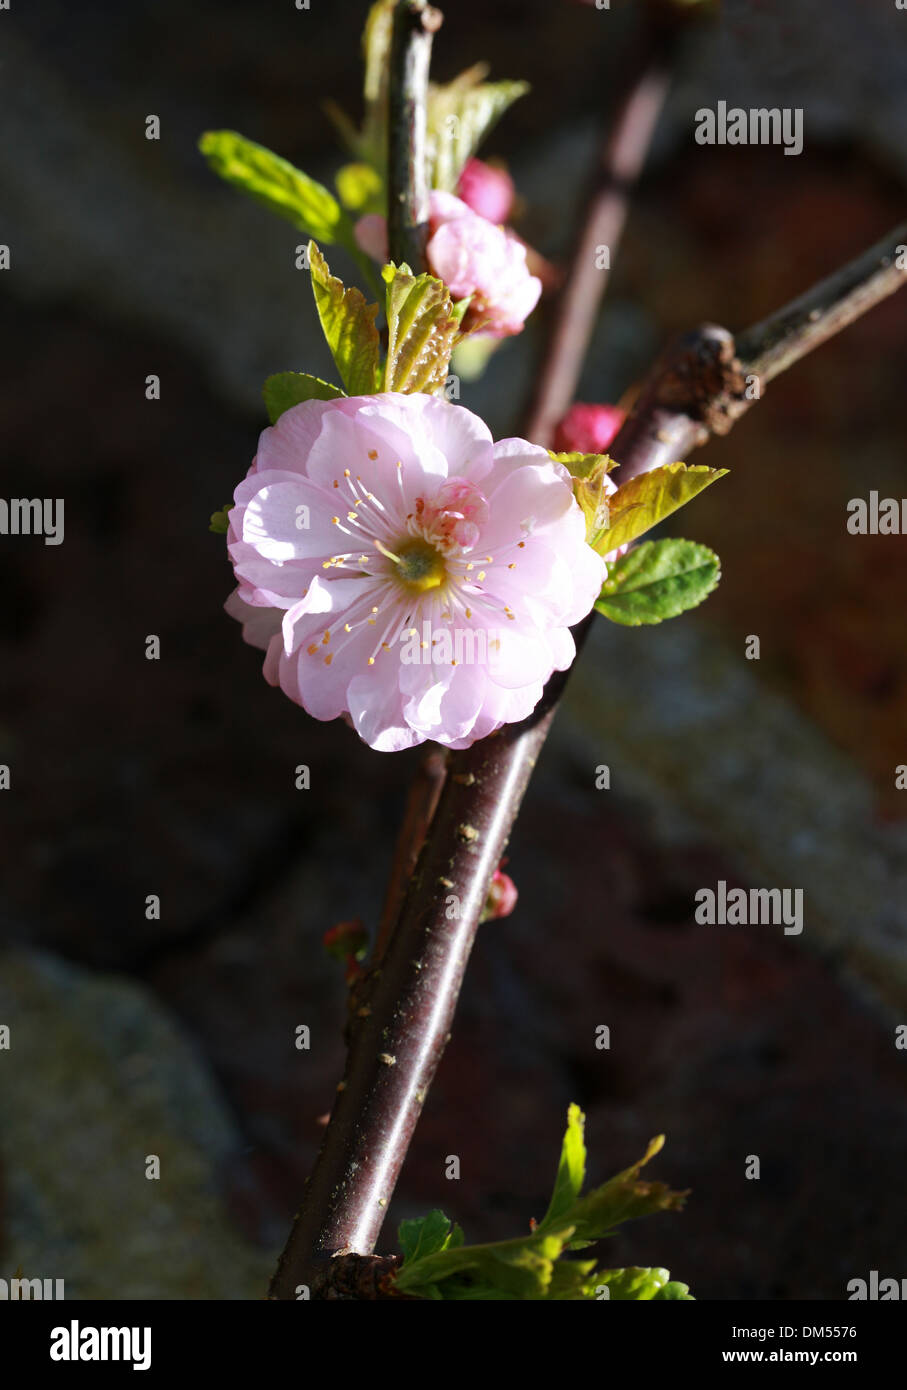 Flowering Almond, Prunus triloba 'Flore Plena', Rosaceae. China. Stock Photo